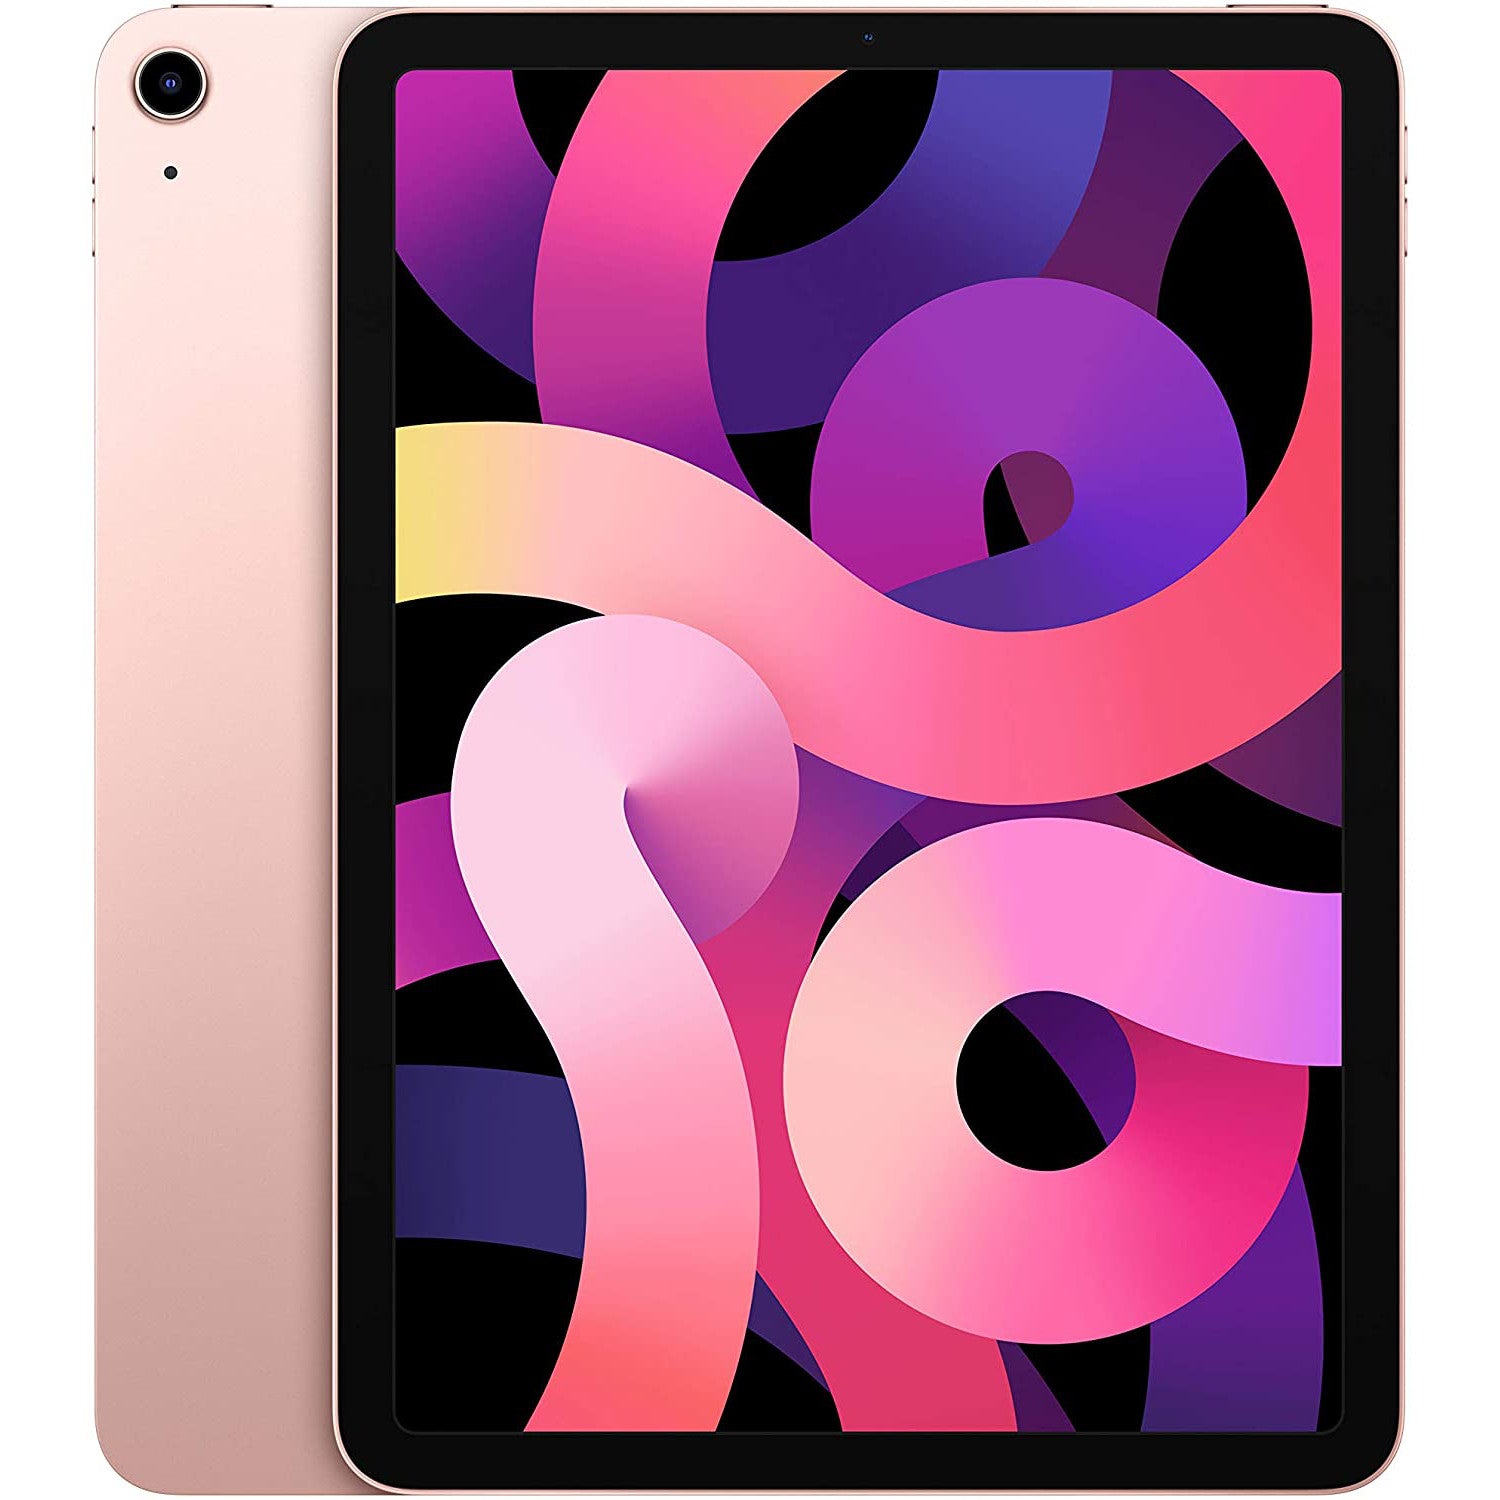 iPad Air 4 64GB WiFi - Oro rosa - Impecable